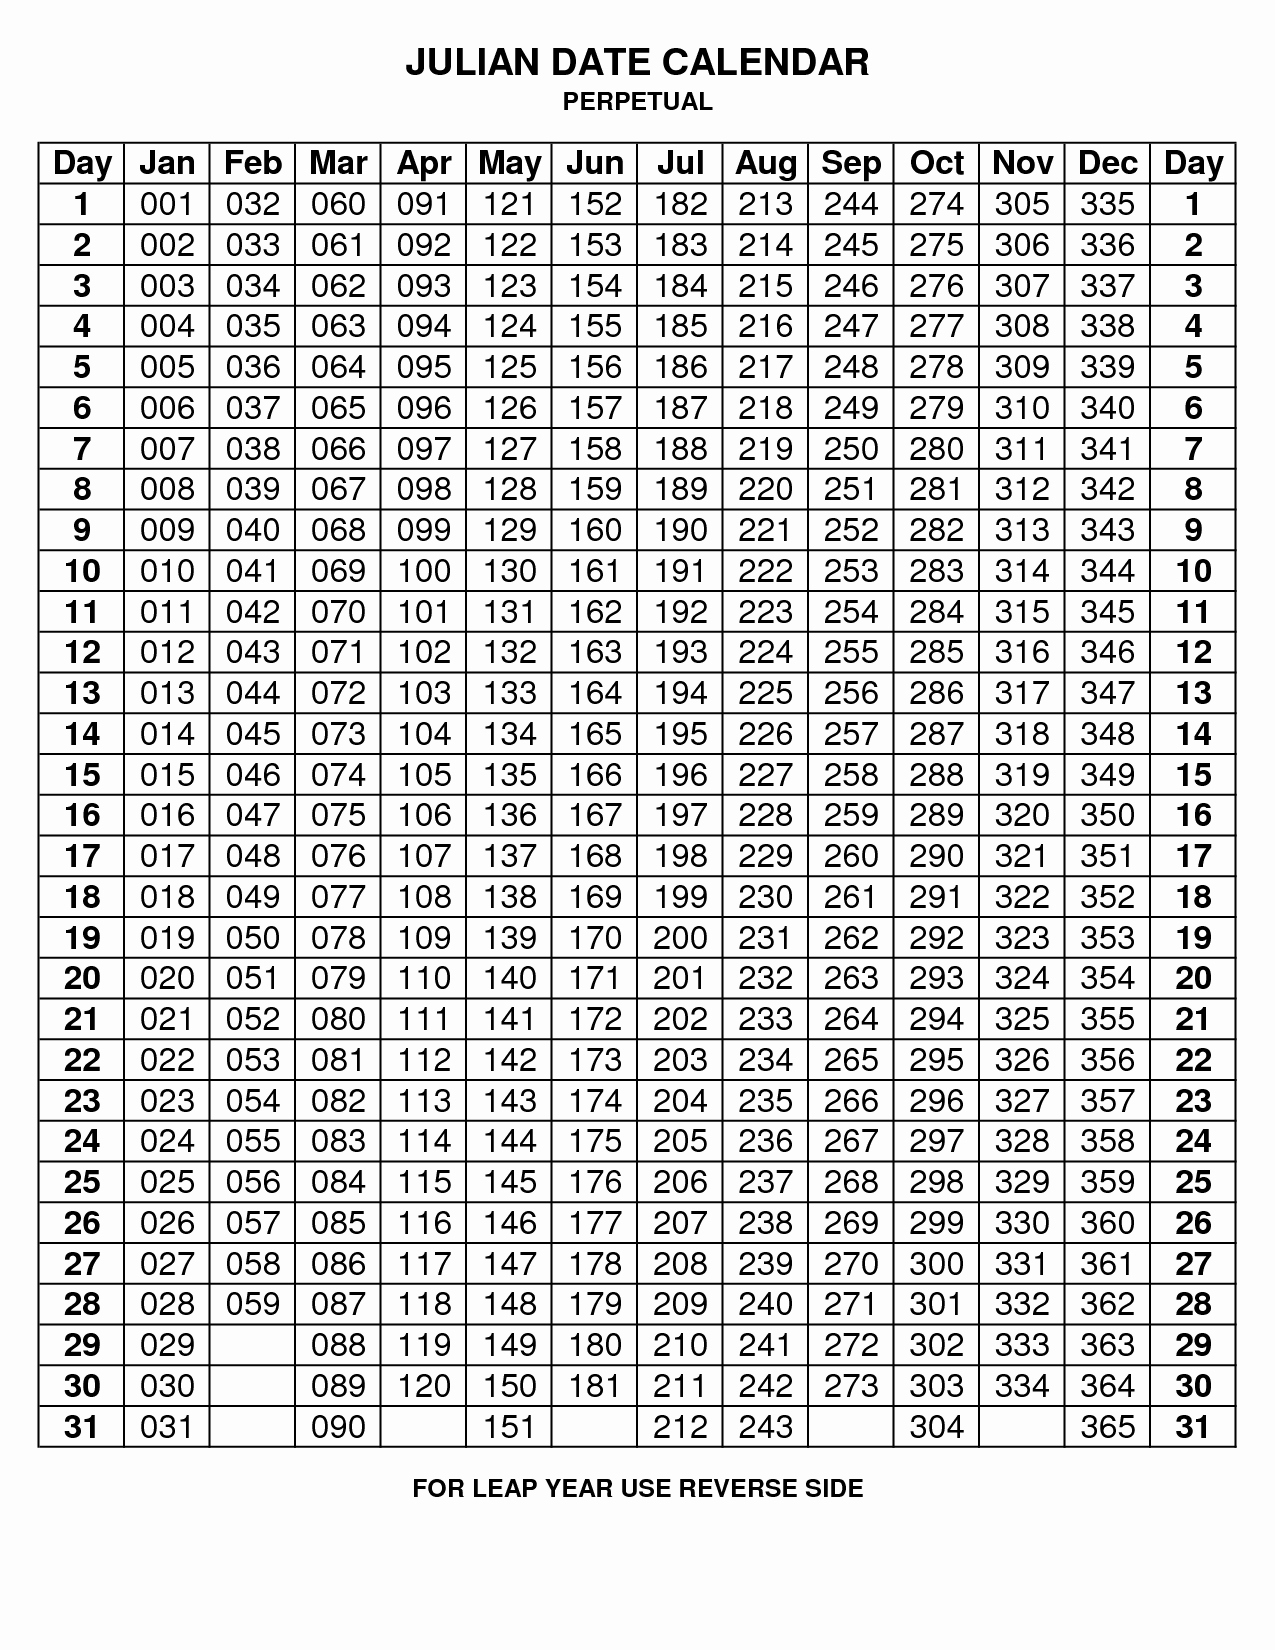 Depo Provera Perpetual Calendar To Print - Calendar in Depo Provera Perpetual Calendar 2020